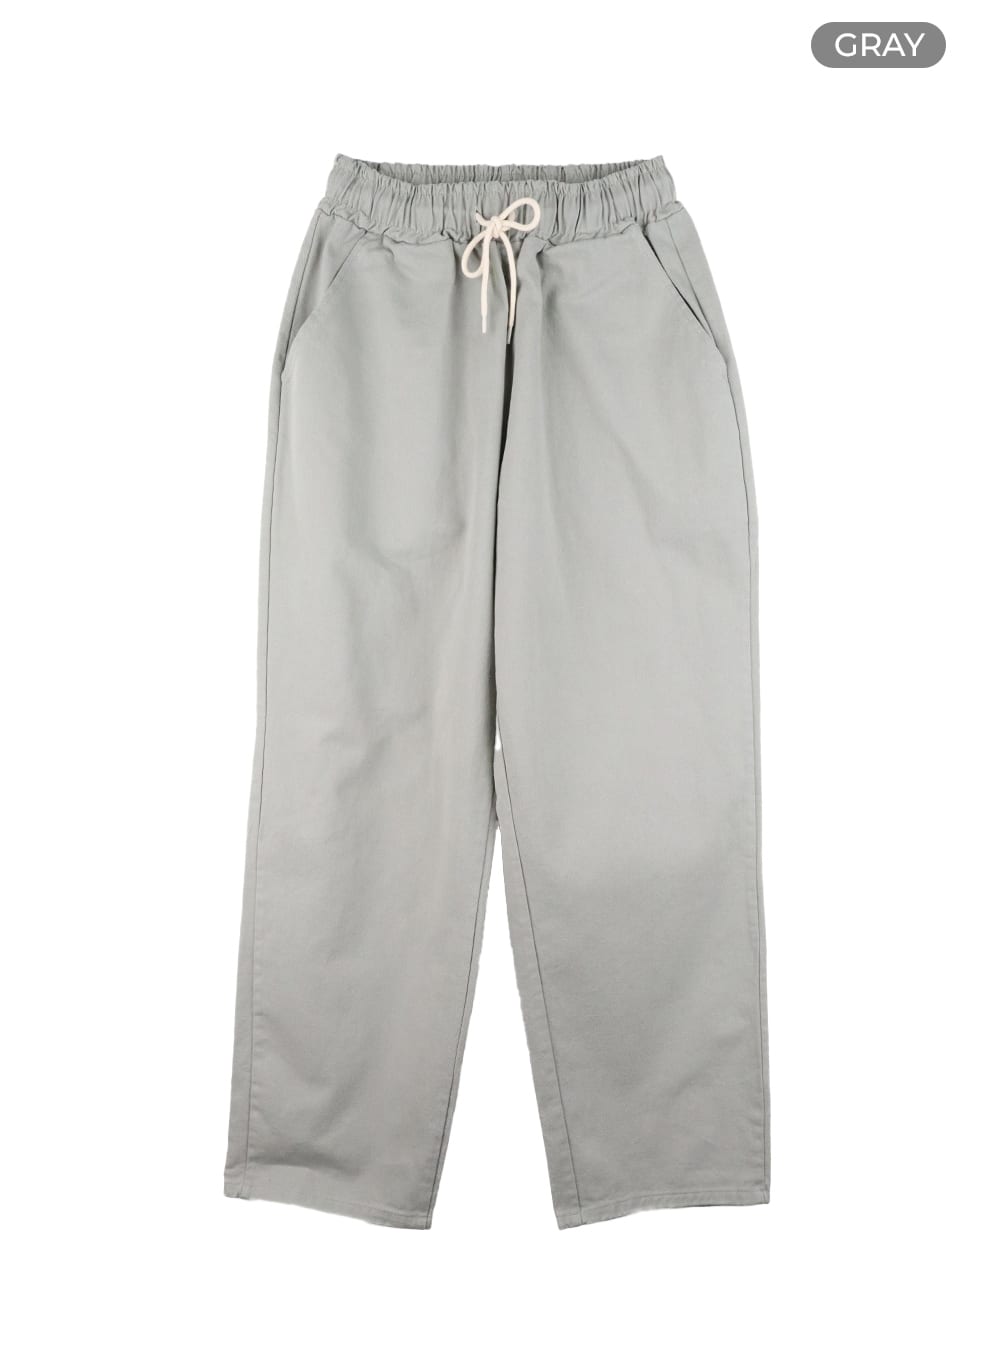 mens-wide-leg-cotton-pants-ia402